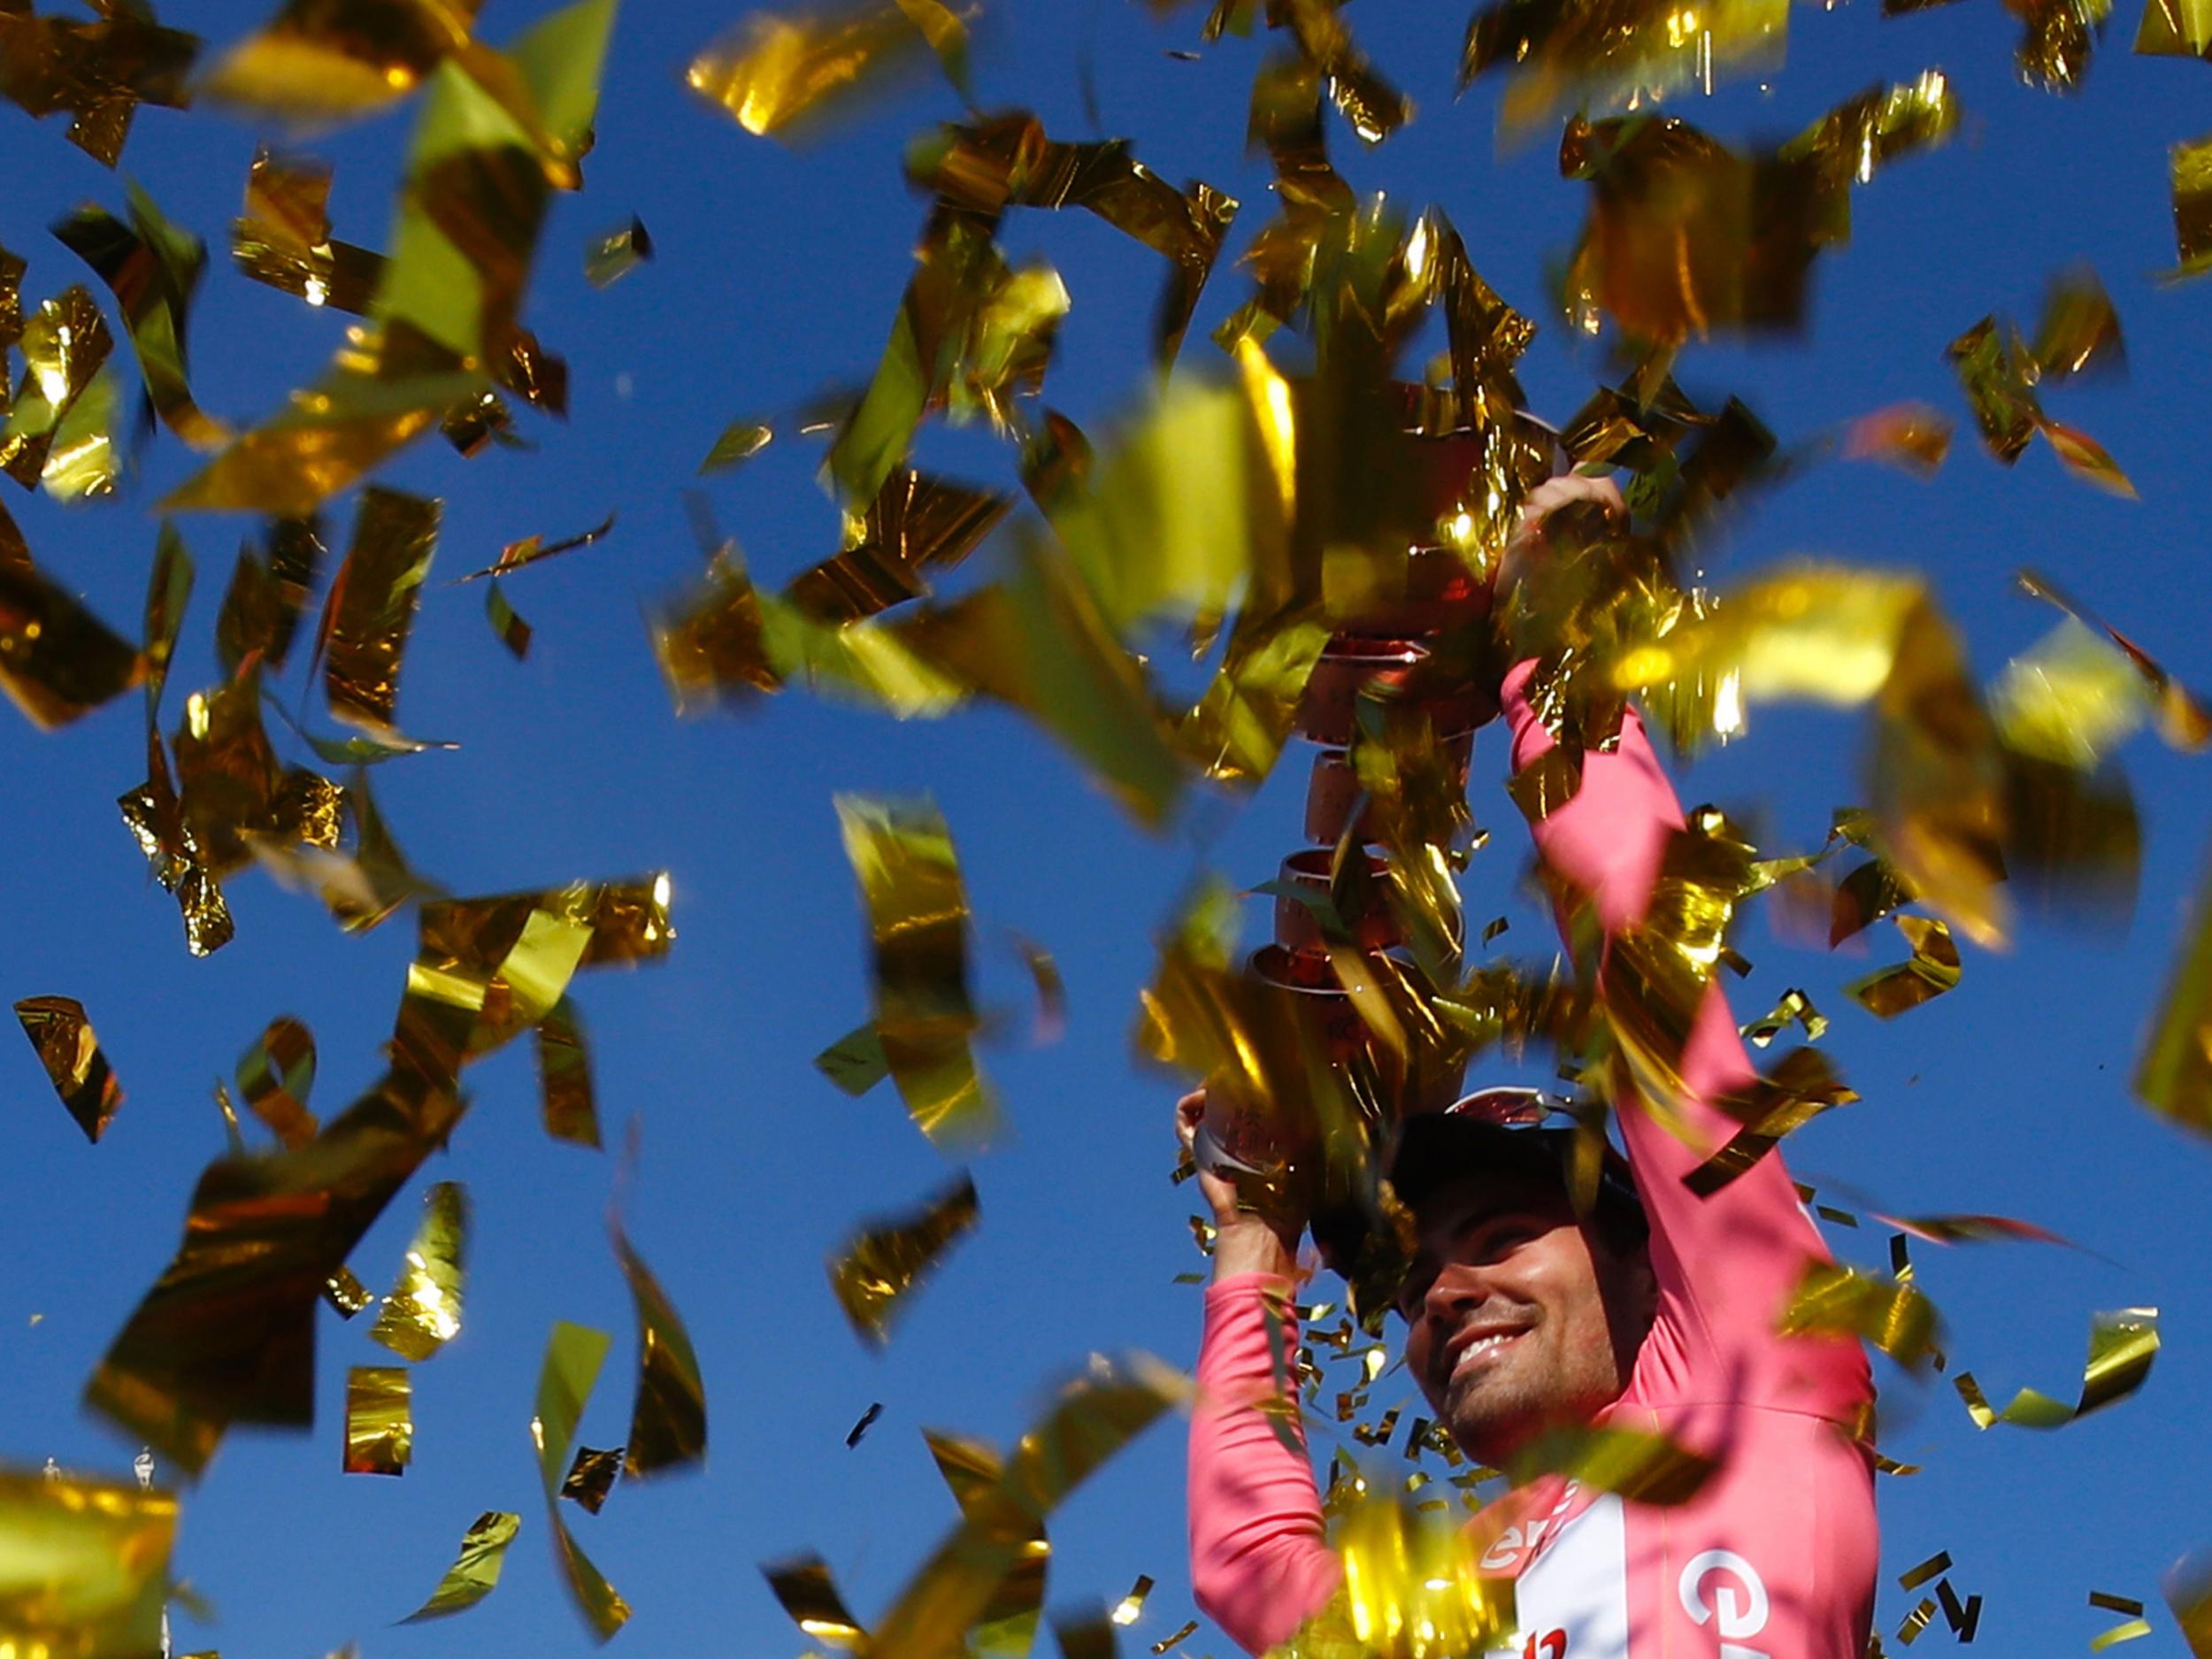 Tom Dumoulin celebrates winning the 100th Giro d'Italia earlier this year